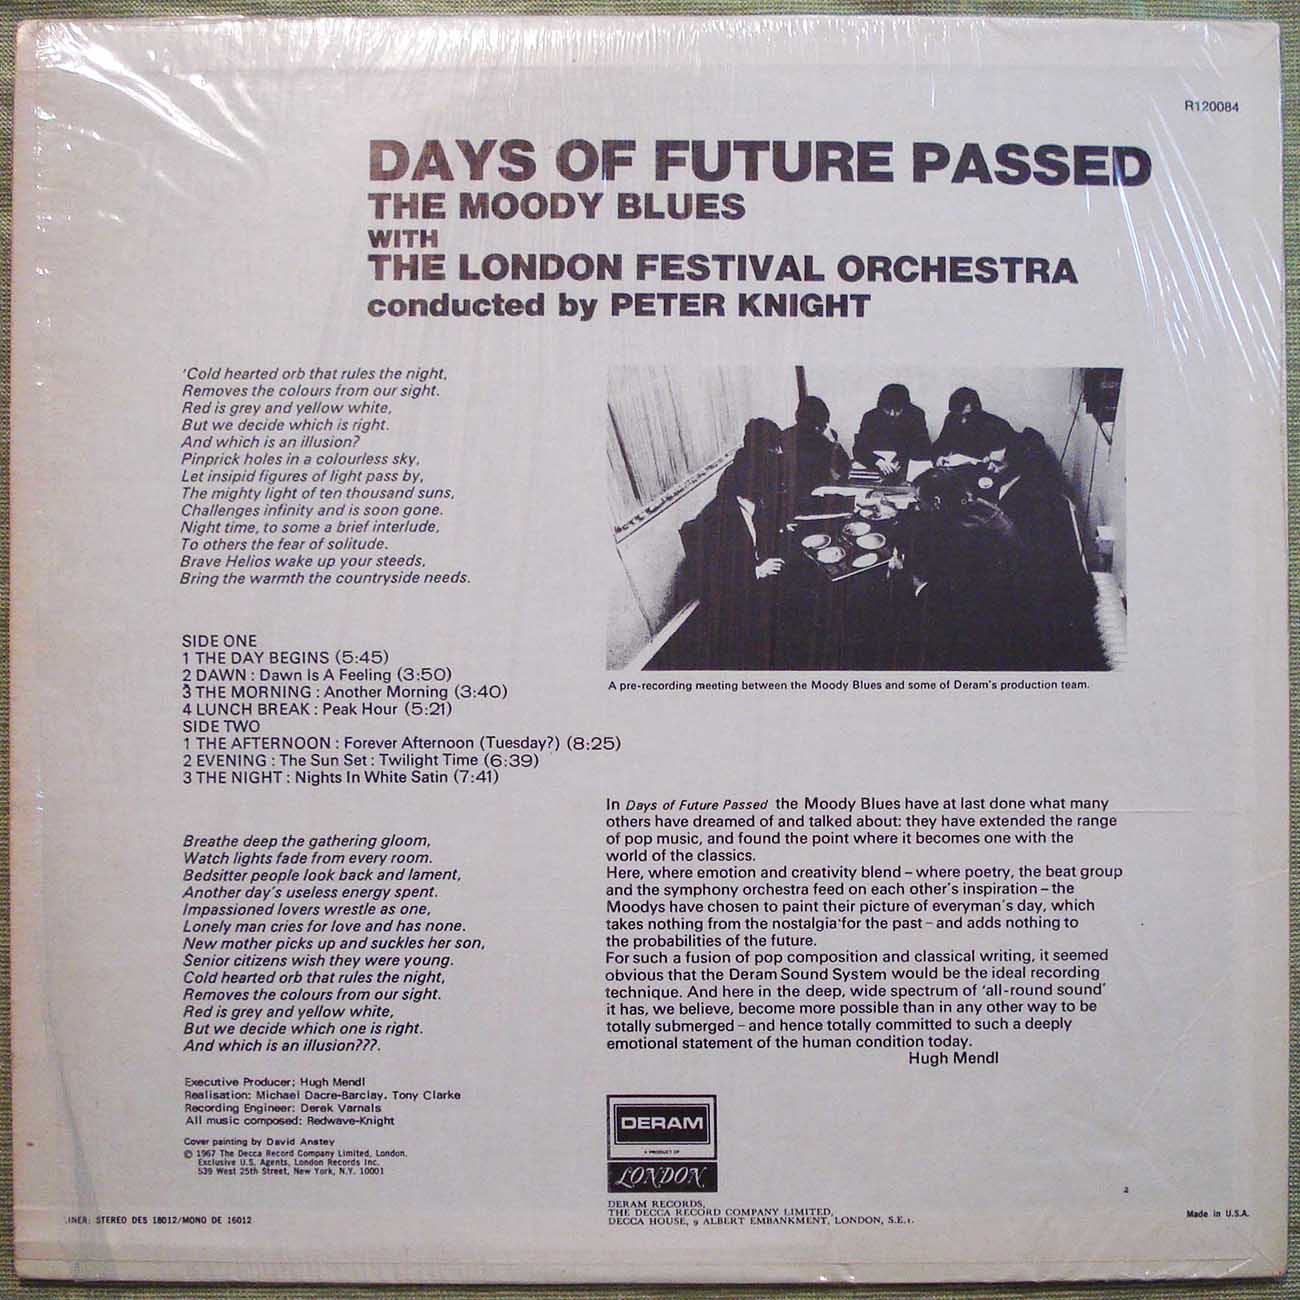 The Moody Blues - Days of Future Passed (1967) Vinyl LP 33rpm DES18012